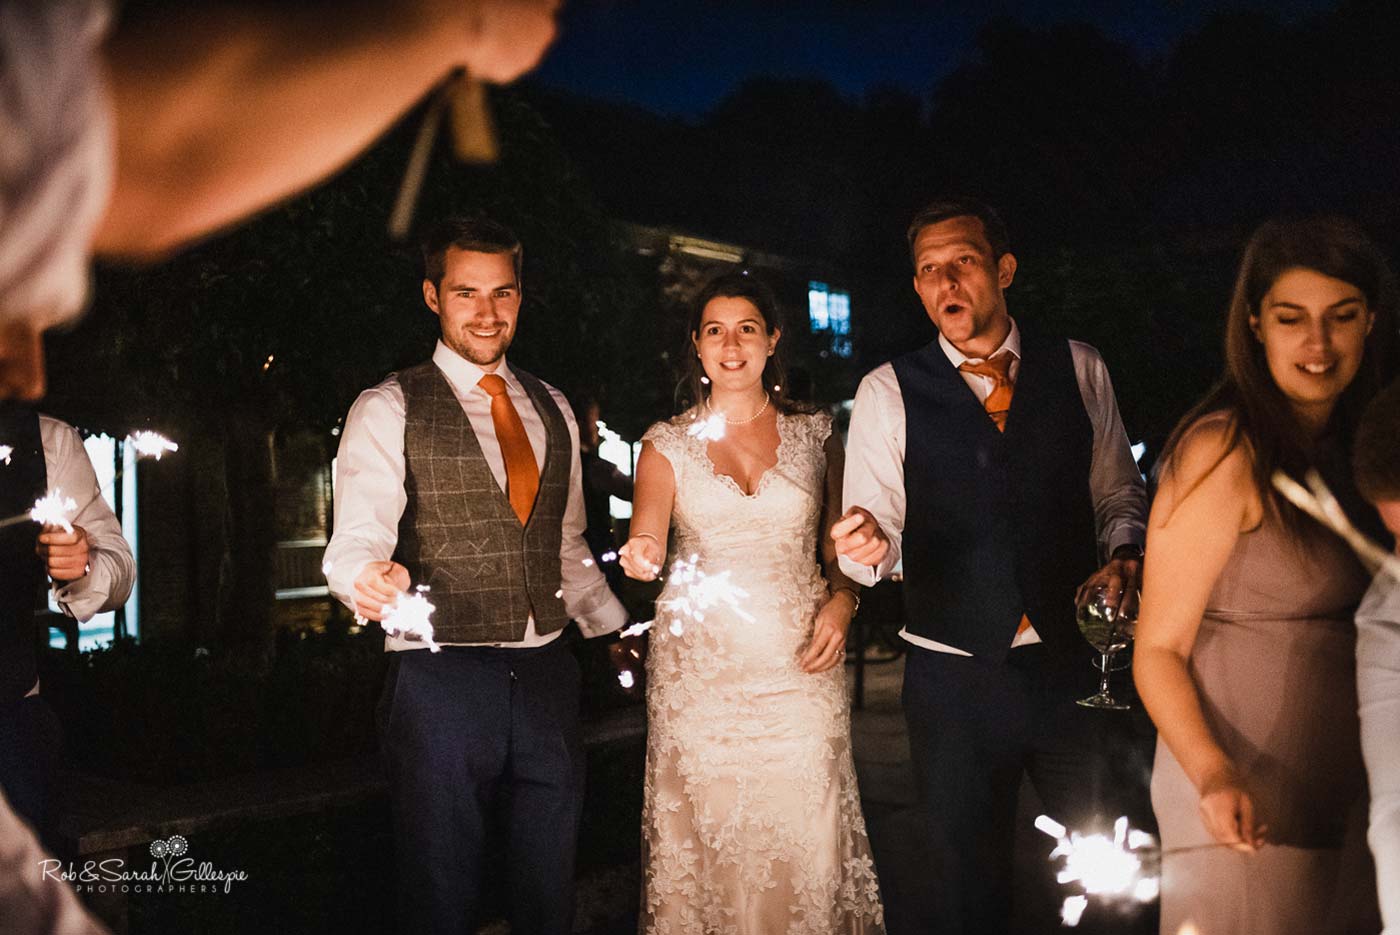 Sparklers at Hazel Gap Barn wedding